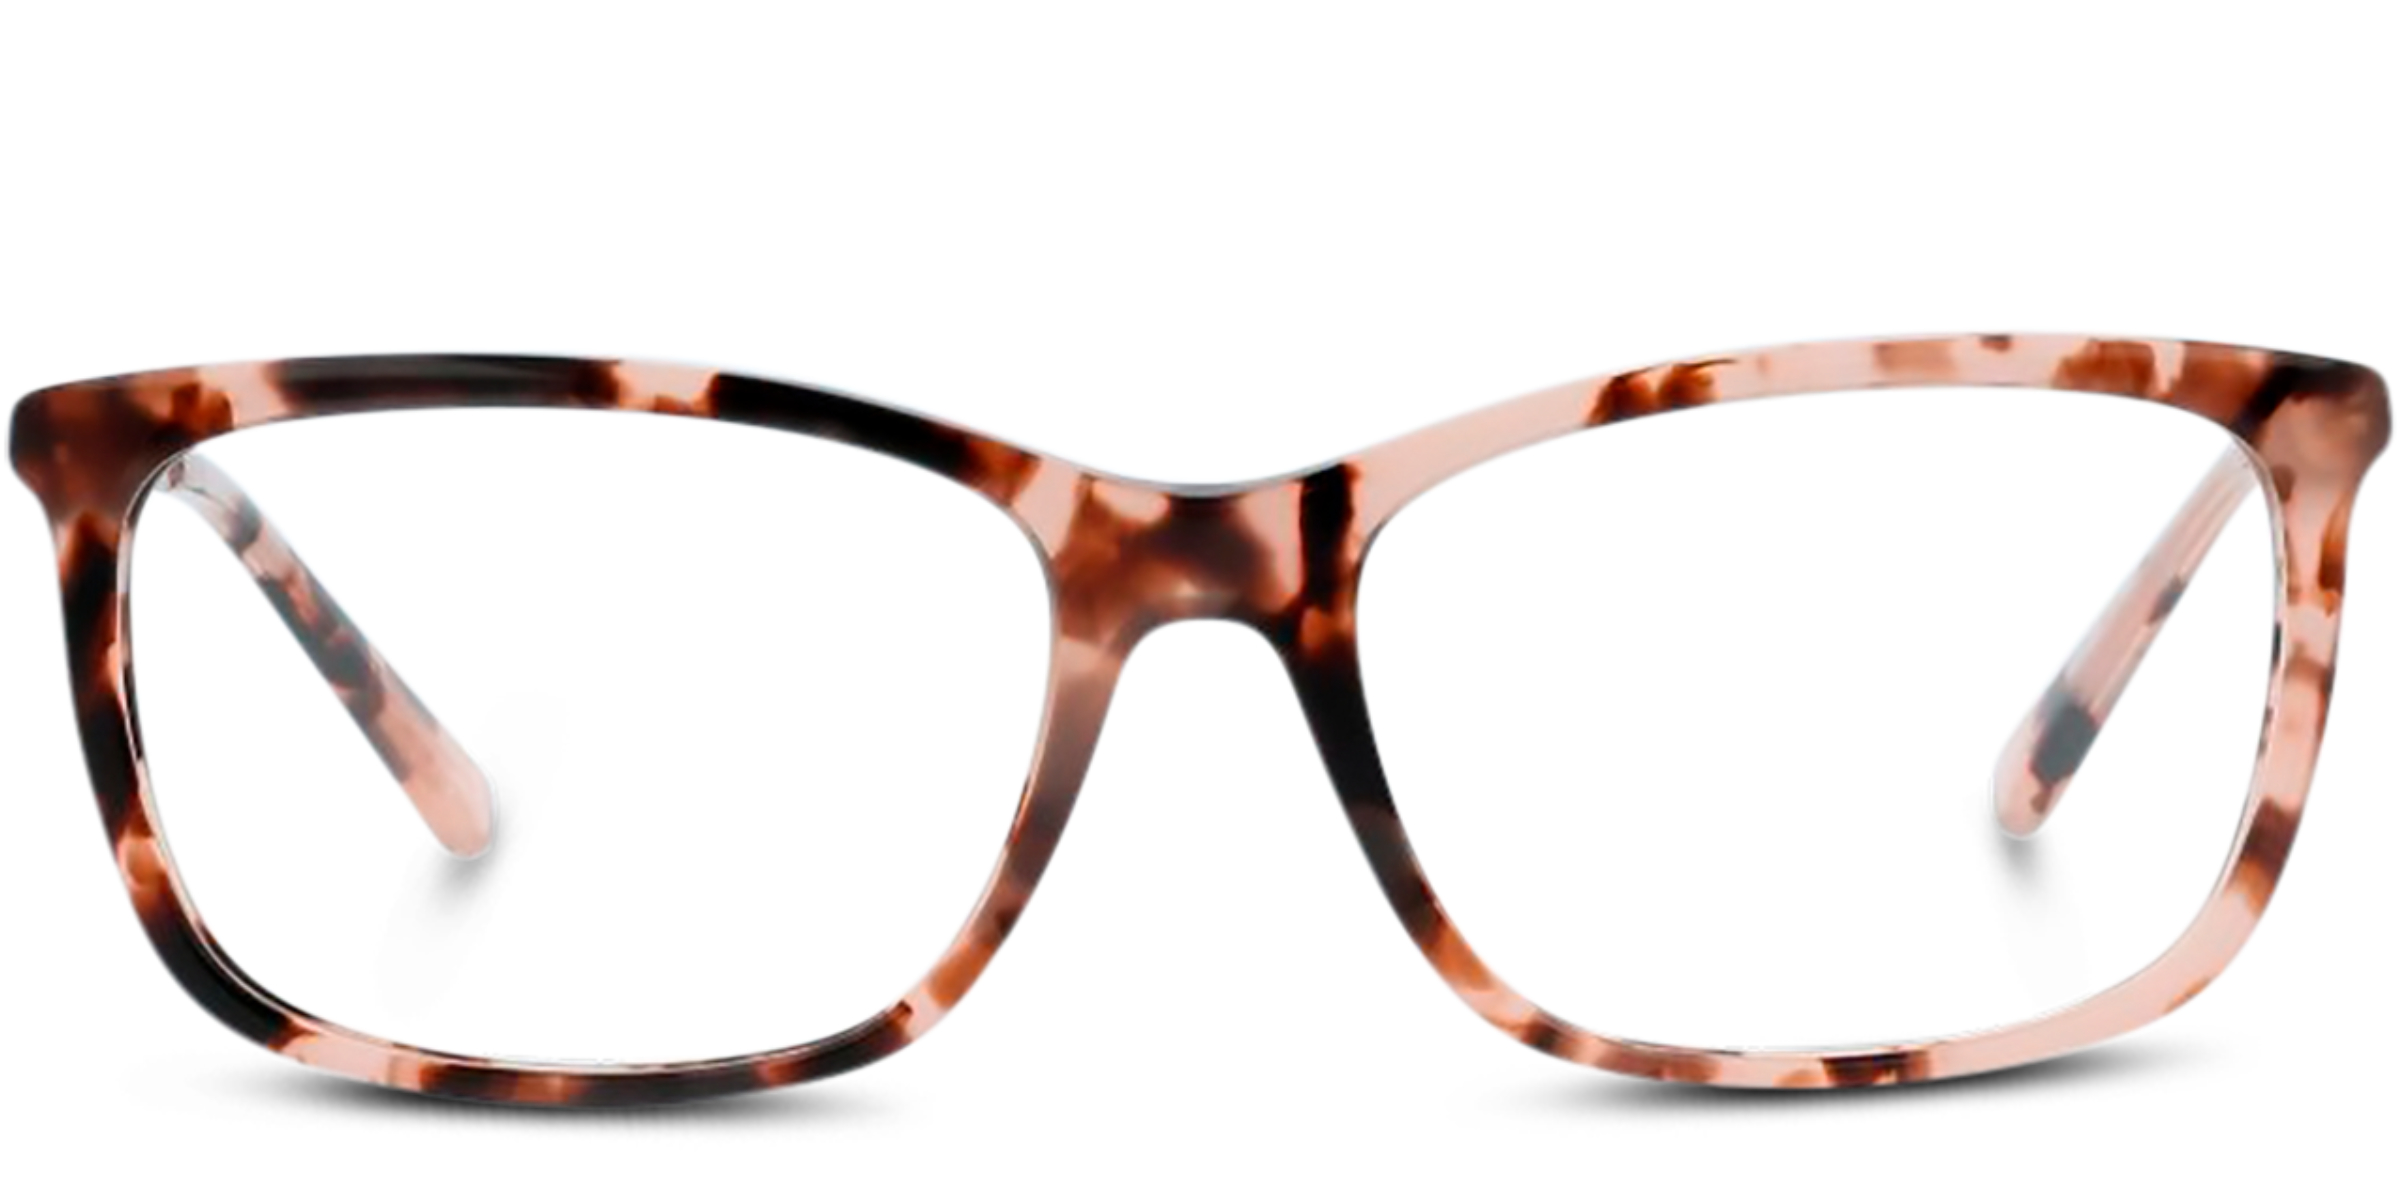 Michael Kors VIVIANNA II eyeglasses for women in Pink Tortoise